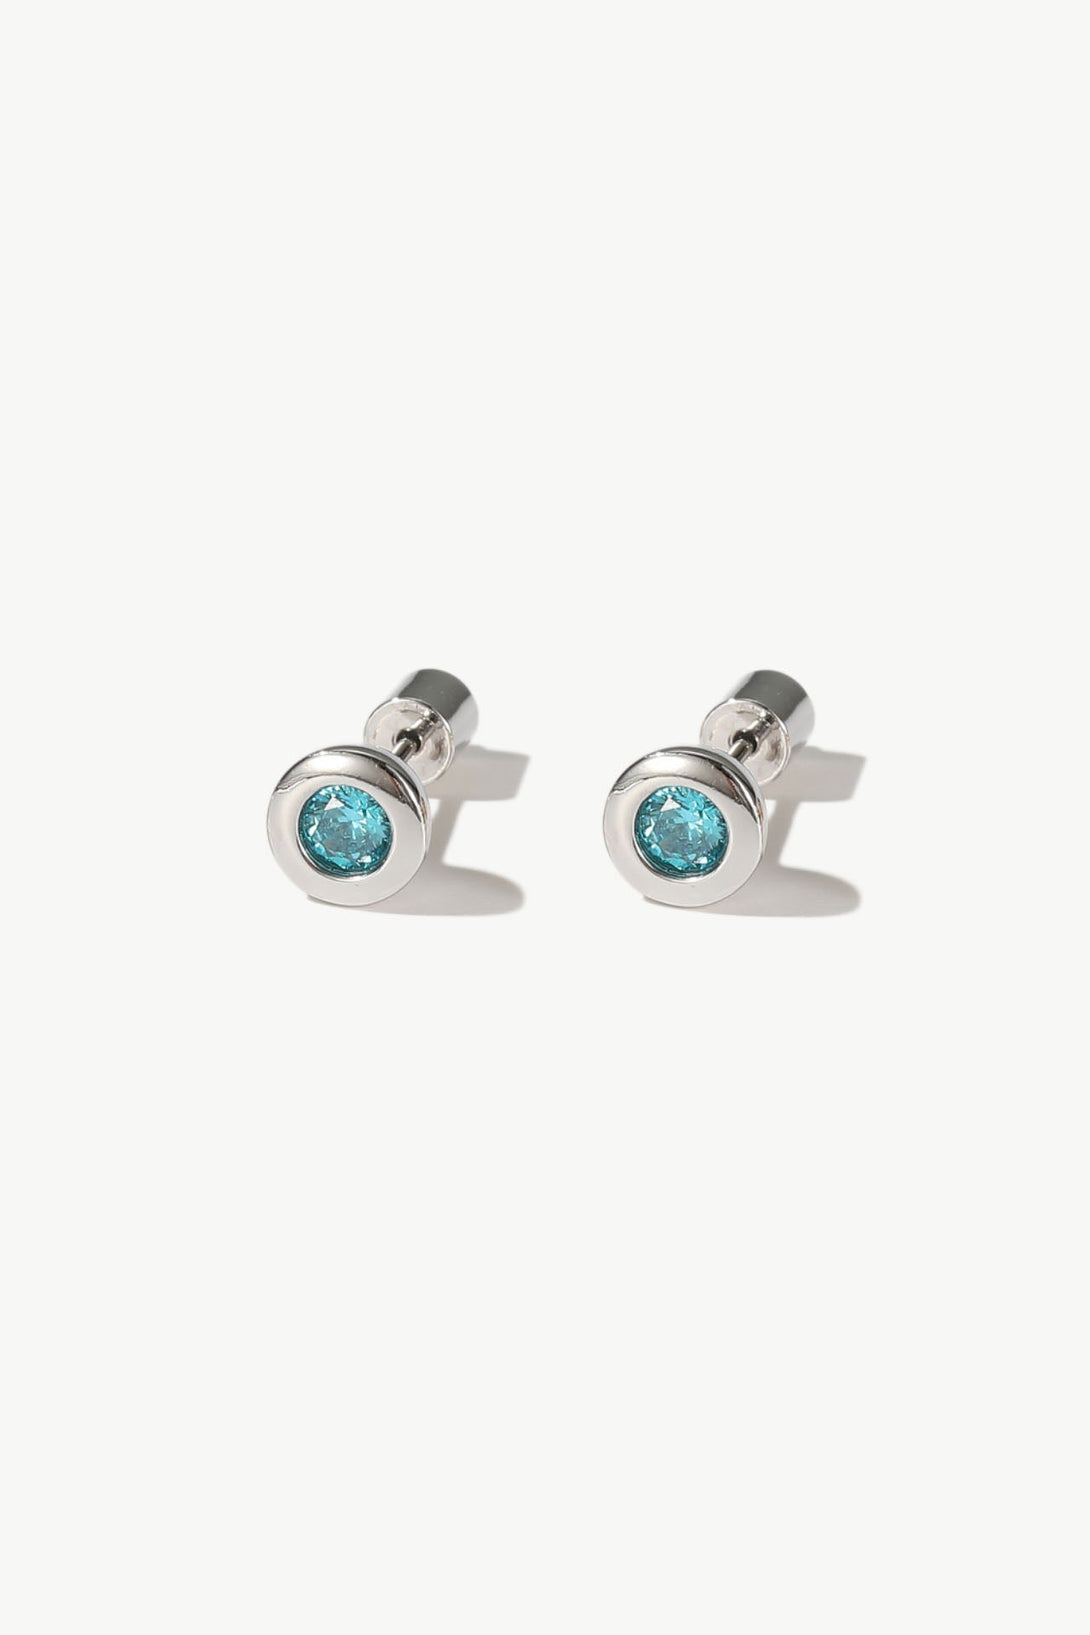 Aurora Silver Bezel Set Aquamarine Blue Solitaire Stud Earrings - Classicharms